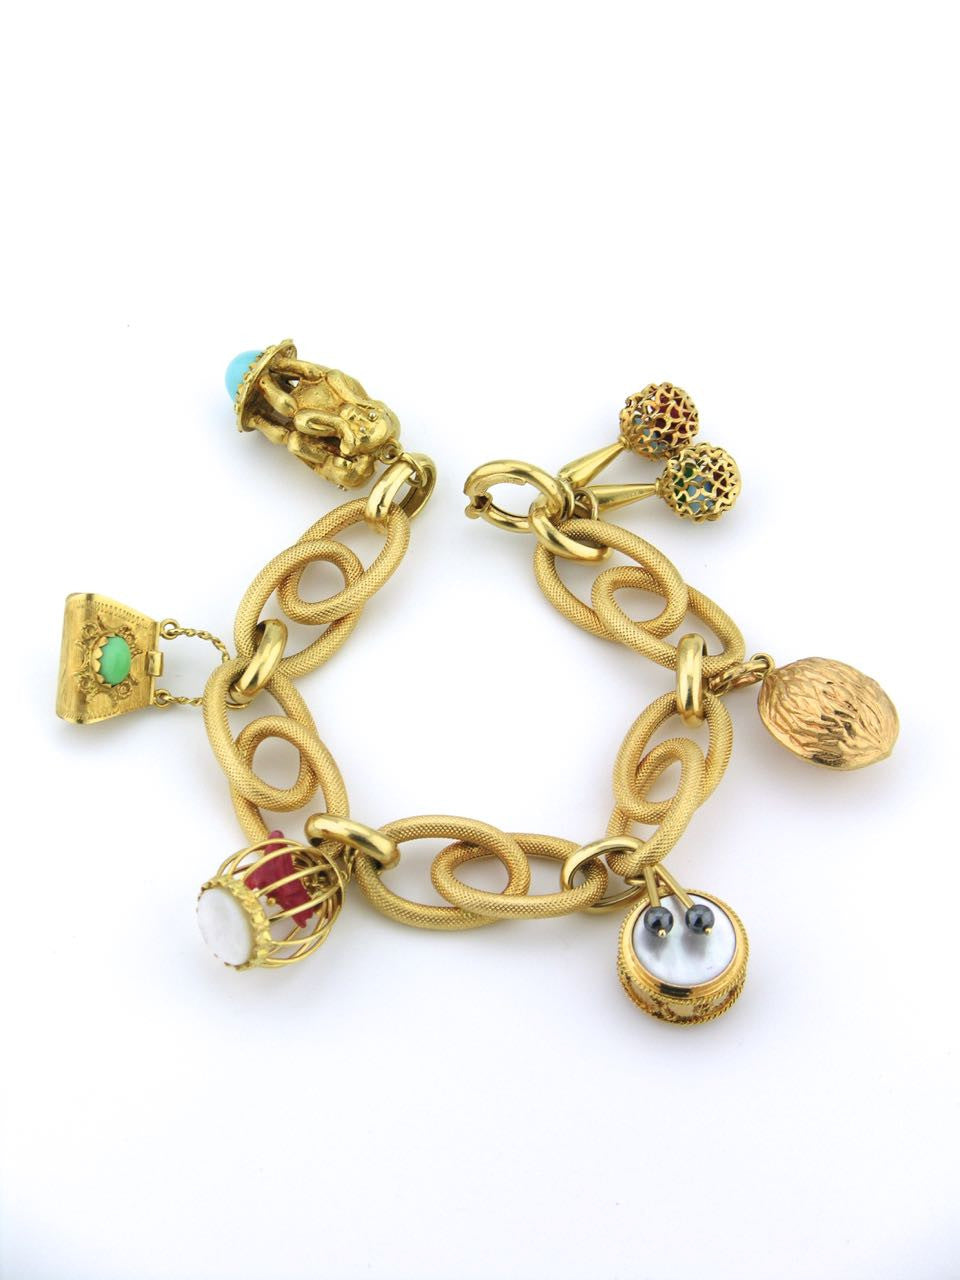 Italian large scale retro 18ct gold charm bracelet